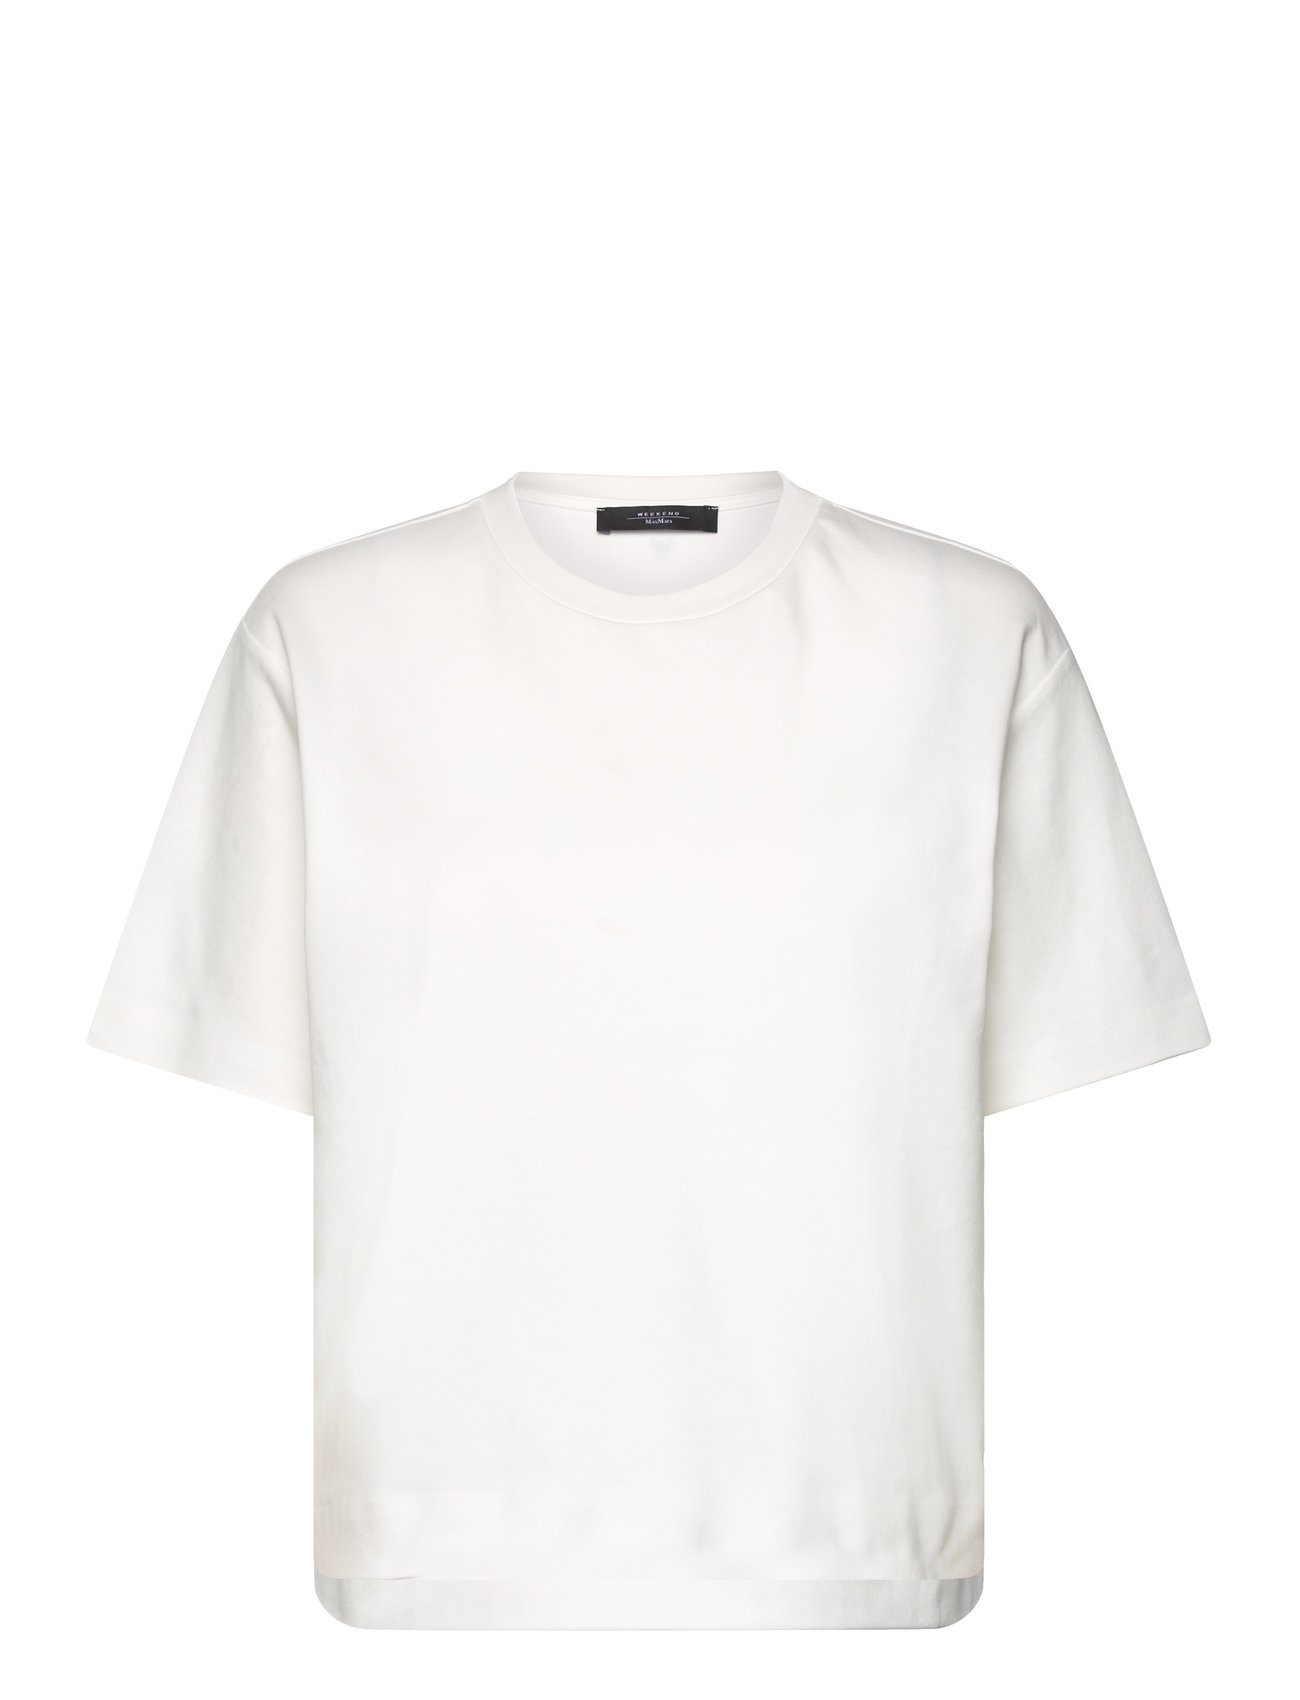 Multid Designers T-shirts & Tops Short-sleeved White Weekend Max Mara